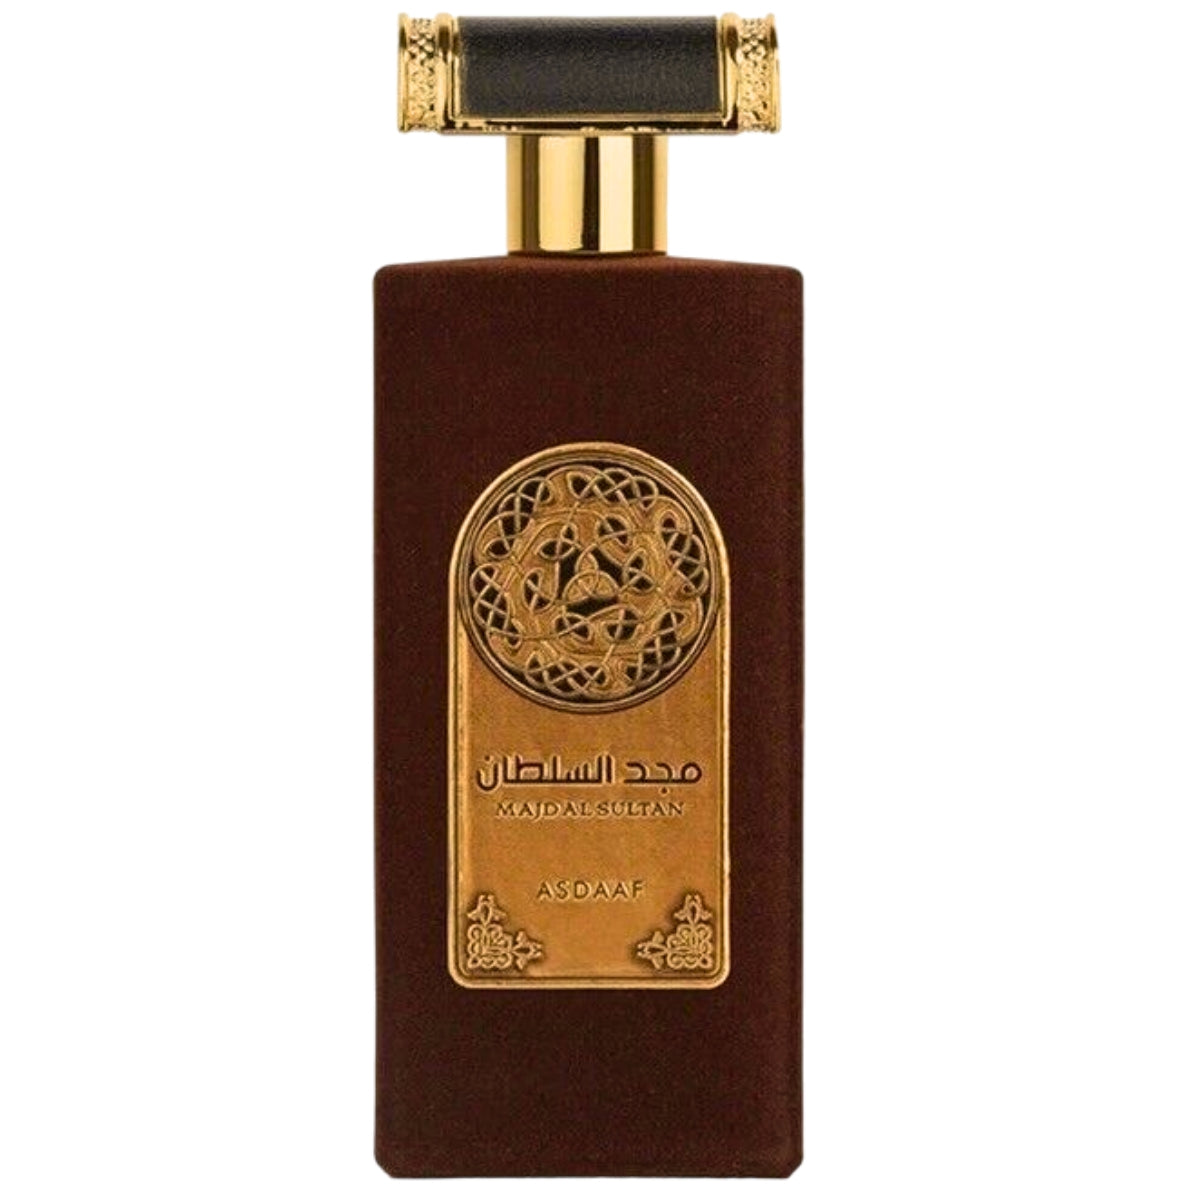 Perfume Majd Al Sultan de Asdaaf Eau de Parfum 100ml